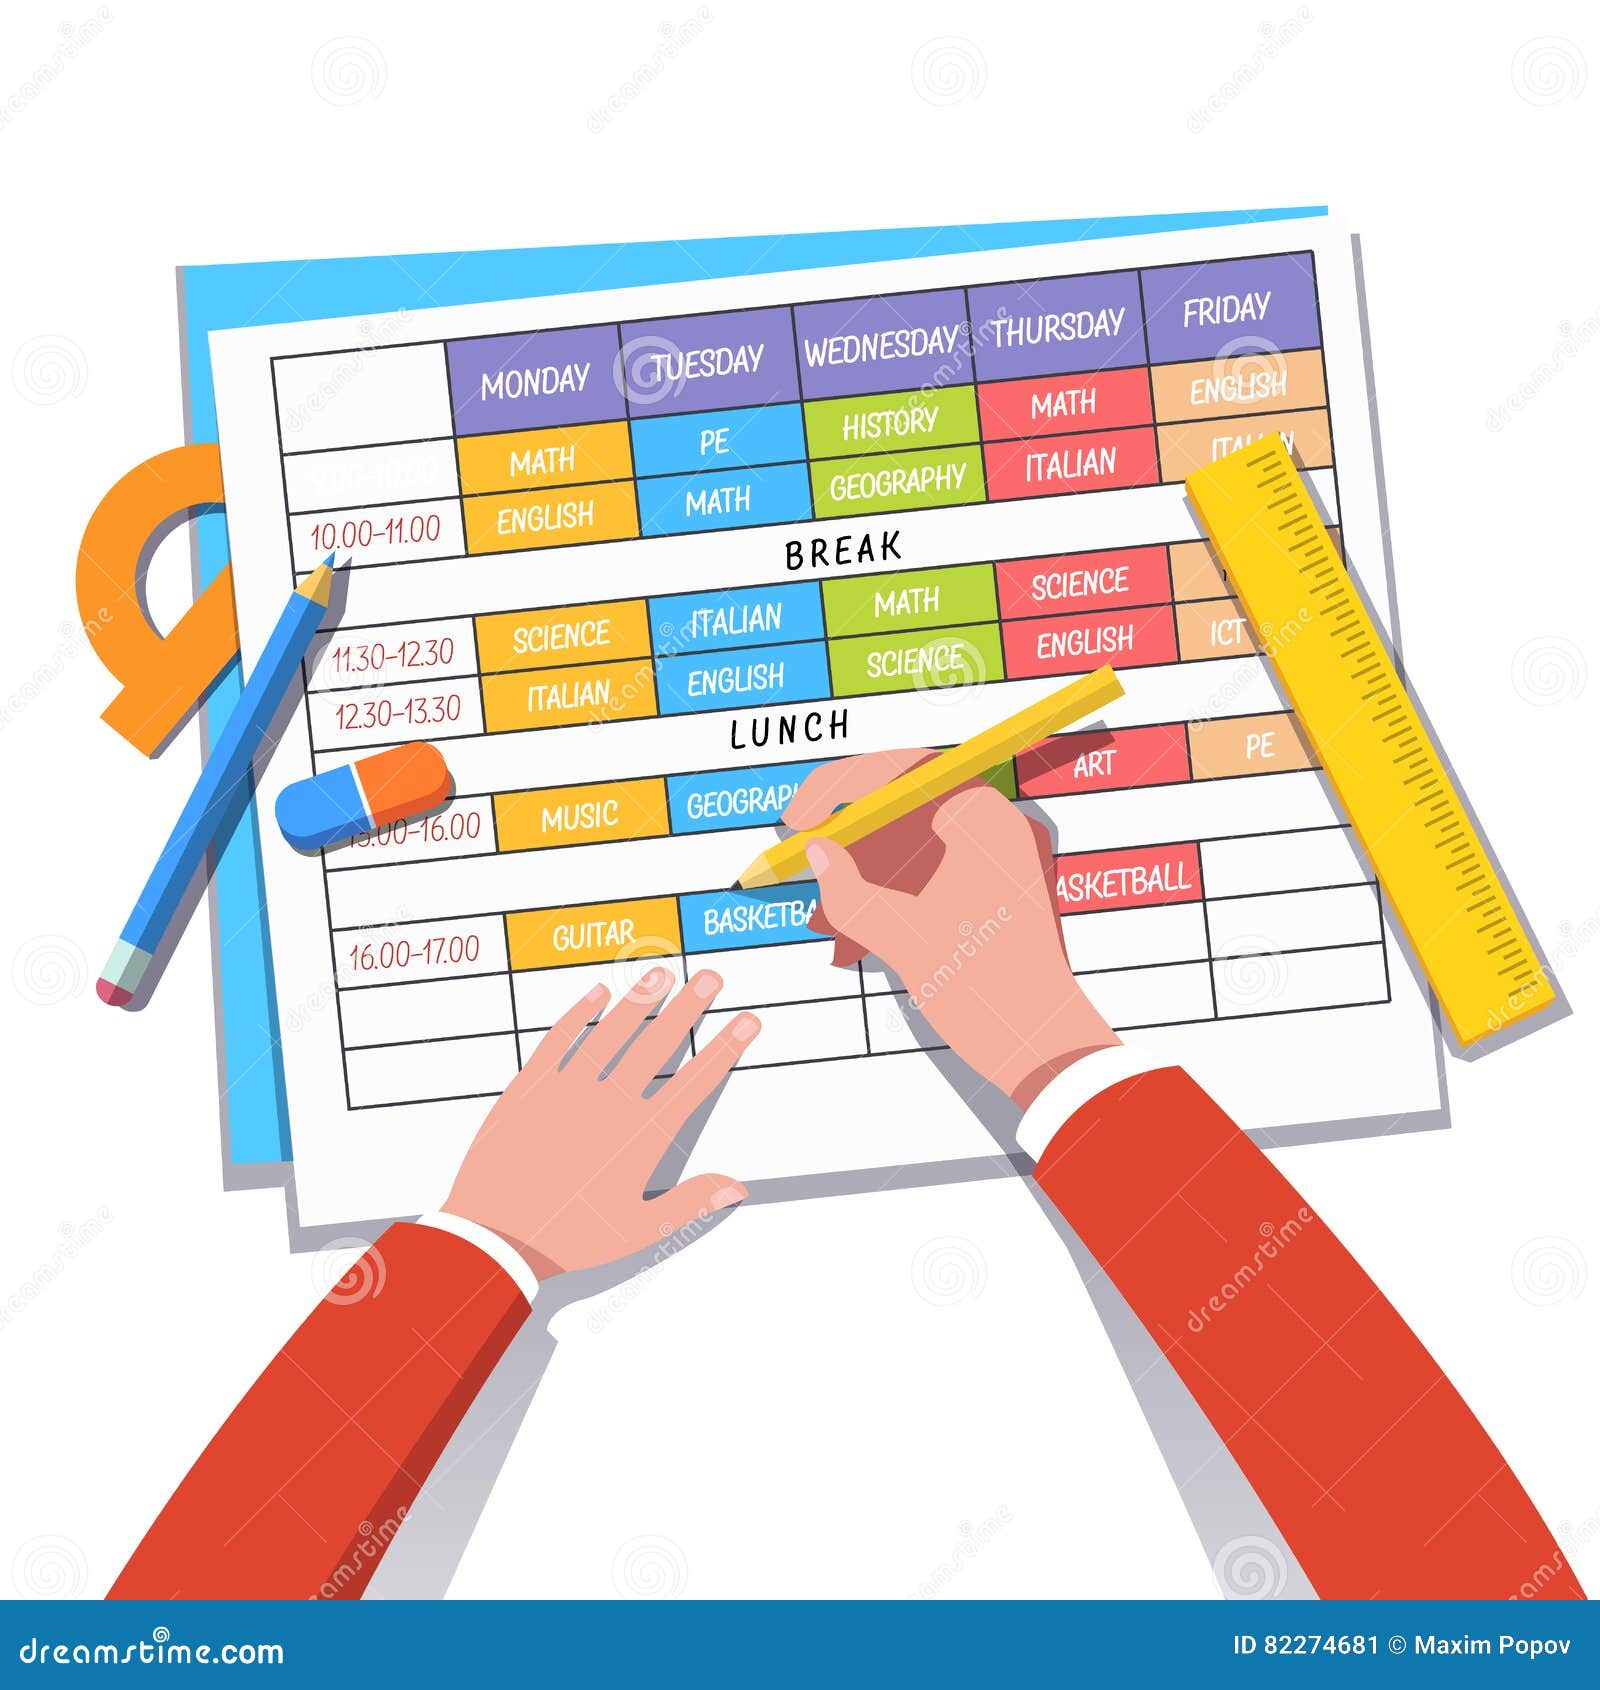 school teacher or student drawing a class schedule